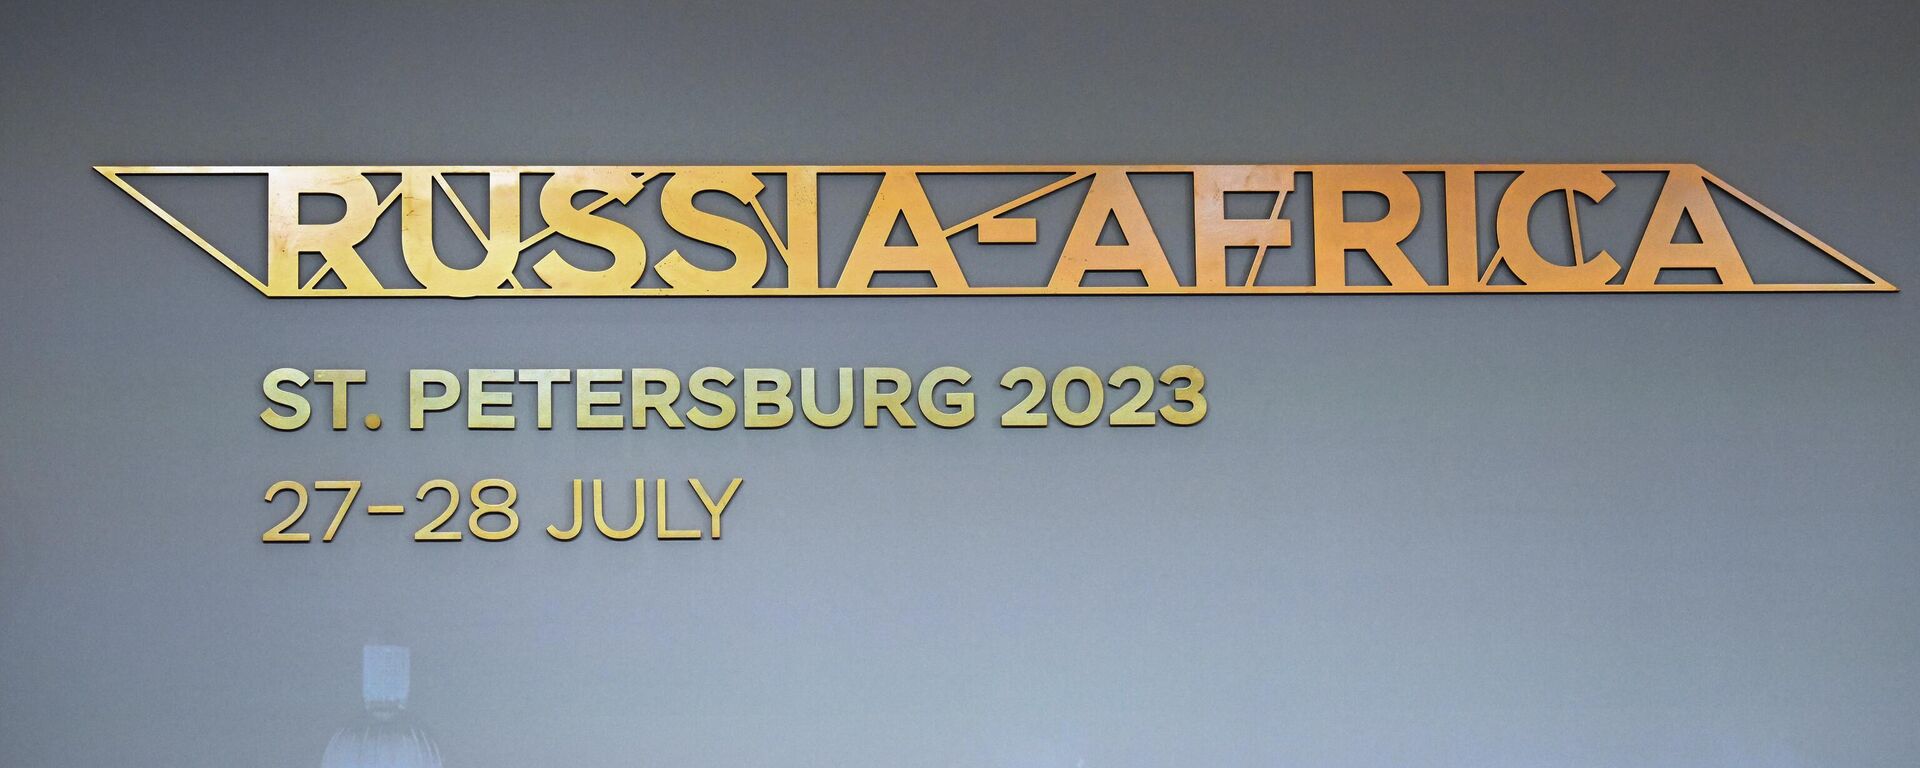 The Second Russia-Africa Summit in St. Petersburg - Sputnik International, 1920, 27.07.2023